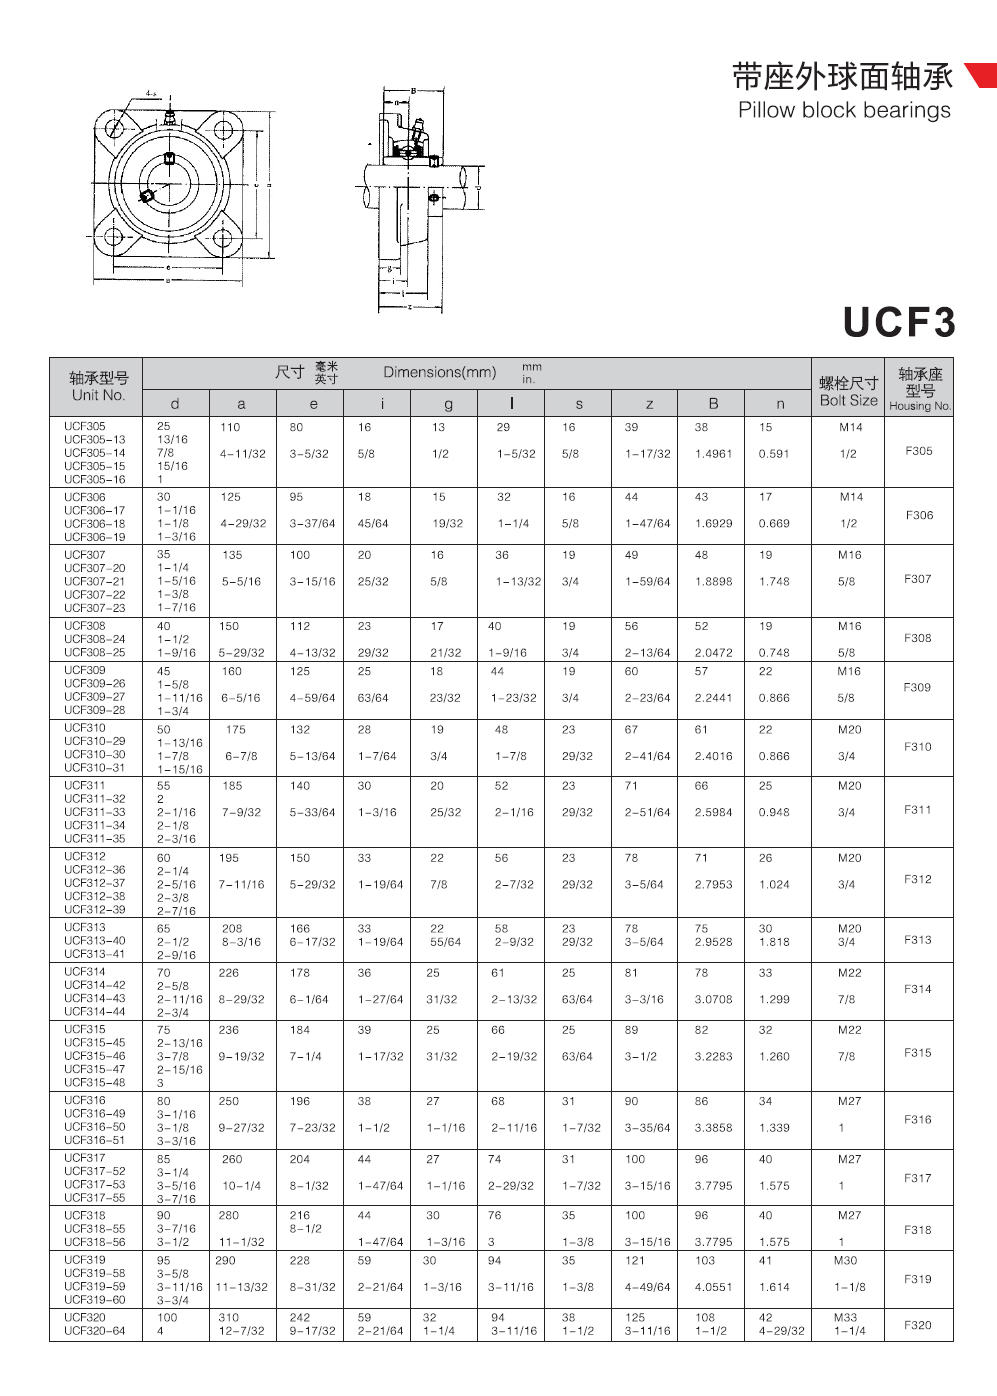 UCF305	 | 
UCF305-13	 | 
UCF305-14	 | 
UCF305-15	 | 
UCF305-16	 | 
UCF306	 | 
UCF306-17	 | 
UCF306-18	 | 
UCF306-19	 | 
UCF307-20	 | 
UCF307-21	 | 
UCF307-22	 | 
UCF307-23	 | 
UCF308-24	 | 
UCF308-25	 | 
UCF309-26	 | 
UCF309-27	 | 
UCF309-28	 | 
UCF310-29	 | 
UCF310-30	 | 
UCF310-31	 | 
UCF311-32	 | 
UCF311-33	 | 
UCF311-34	 | 
UCF311-35	 | 
UCF312-36	 | 
UCF312-37	 | 
UCF312-38	 | 
UCF312-39	 | 
UCF313-40	 | 
UCF313-41	 | 
UCF314-42	 | 
UCF314-43	 | 
UCF314-44	 | 
UCF315-45	 | 
UCF315-46	 | 
UCF315-47	 | 
UCF315-48	 | 
UCF316-49	 | 
UCF316-50	 | 
UCF316-51	 | 
UCF317-52	 | 
UCF317-53	 | 
UCF317	 | 
UCF317-55	 | 
UCF318	 | 
UCF318-55	 | 
UCF318-56	 | 
UCF319	 | 
UCF319-58	 | 
UCF319-59	 | 
UCF319-60	 | 
UCF320	 | 
UCF320-64	 | 
UCF307	 | 
UCF308	 | 
UCF309	 | 
UCF310	 | 
UCF311	 | 
UCF312	 | 
UCF313	 | 
UCF314	 | 
UCF315	 | 
UCF316	 | 